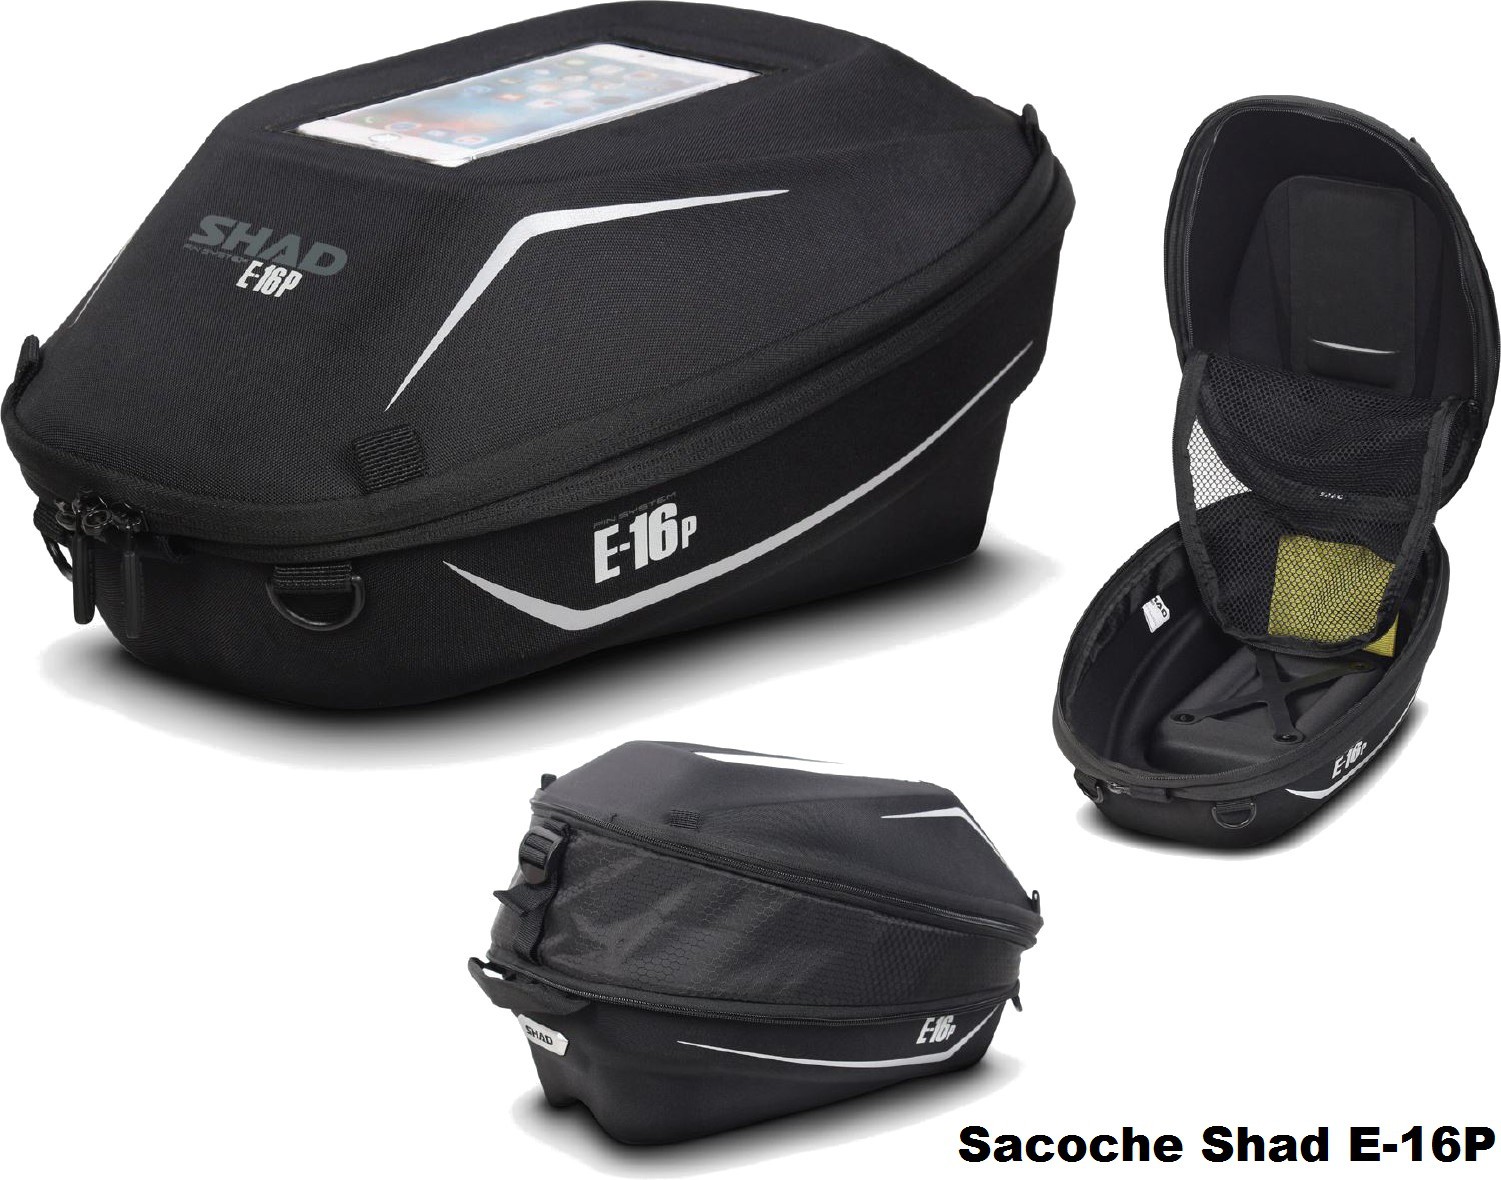 Support sacoche réservoir SHAD PIN Système pour Yamaha R1 YZF 1000 (09-18)